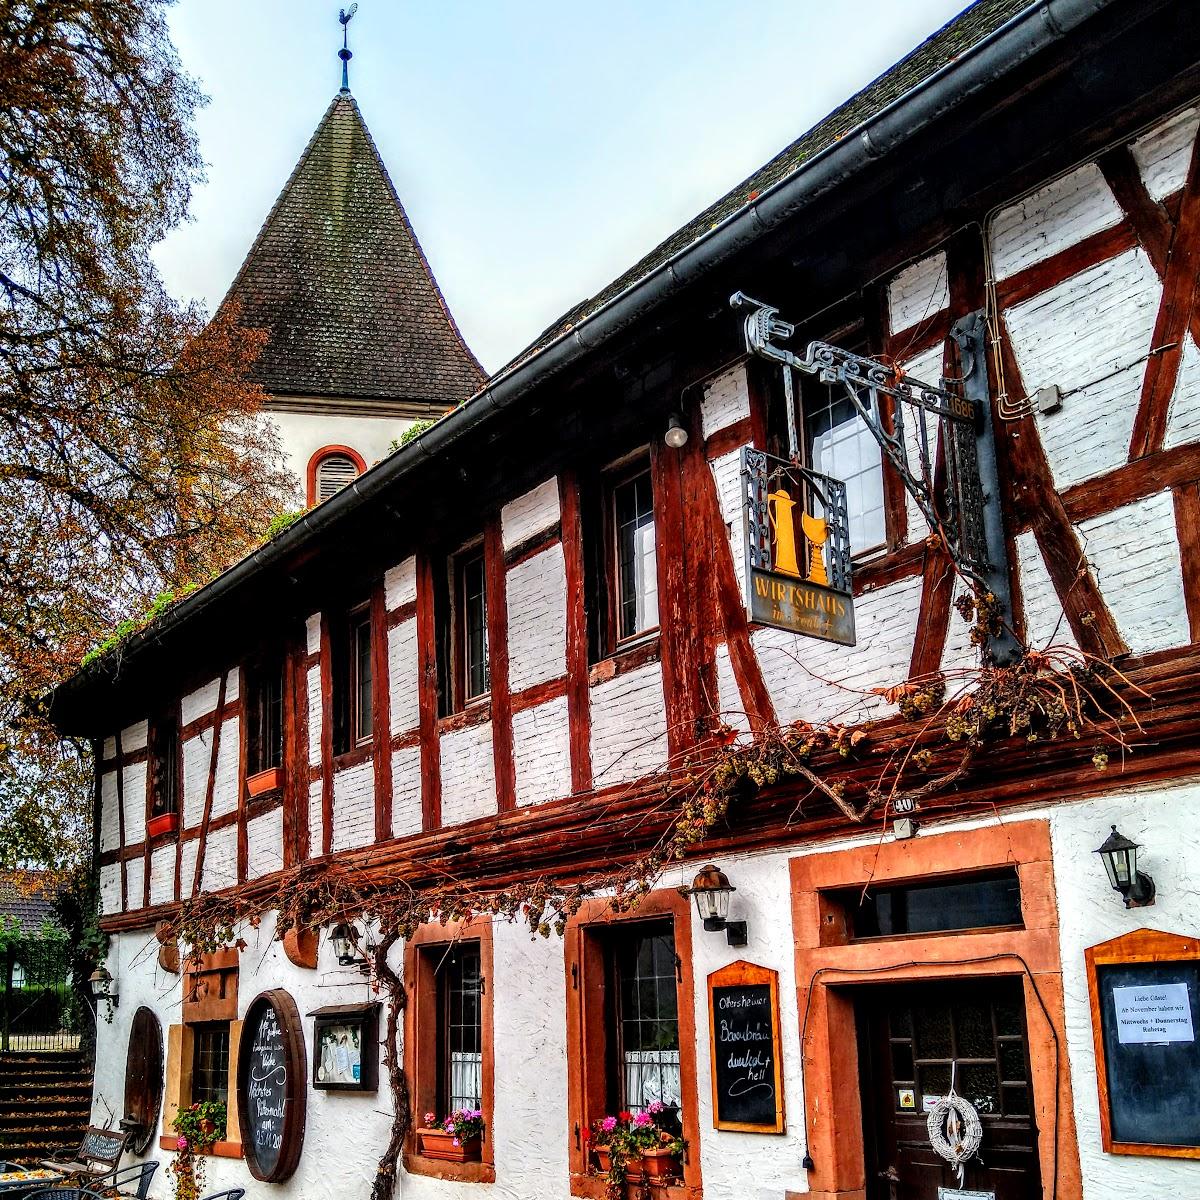 Restaurant "Rittermahl" in Annweiler am Trifels